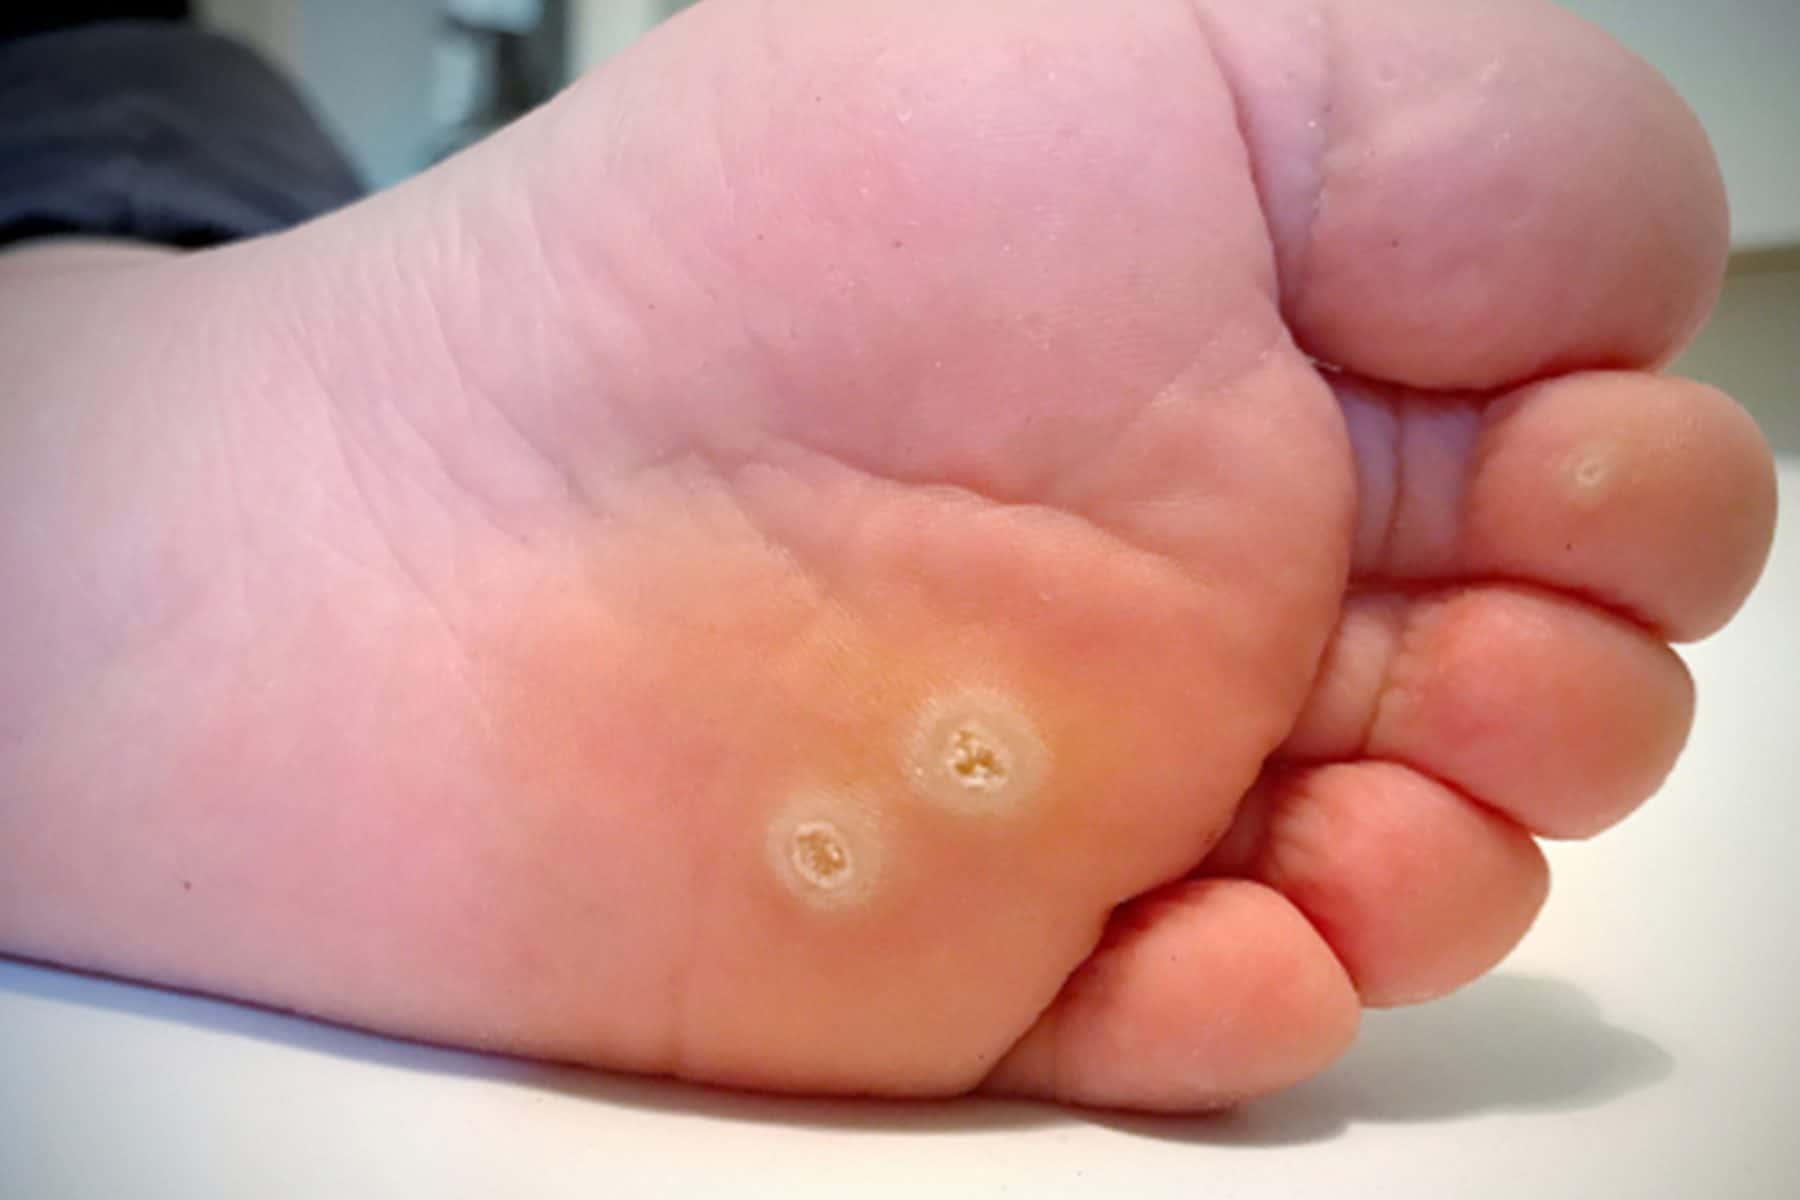 wart under foot removal cure detox foie colon